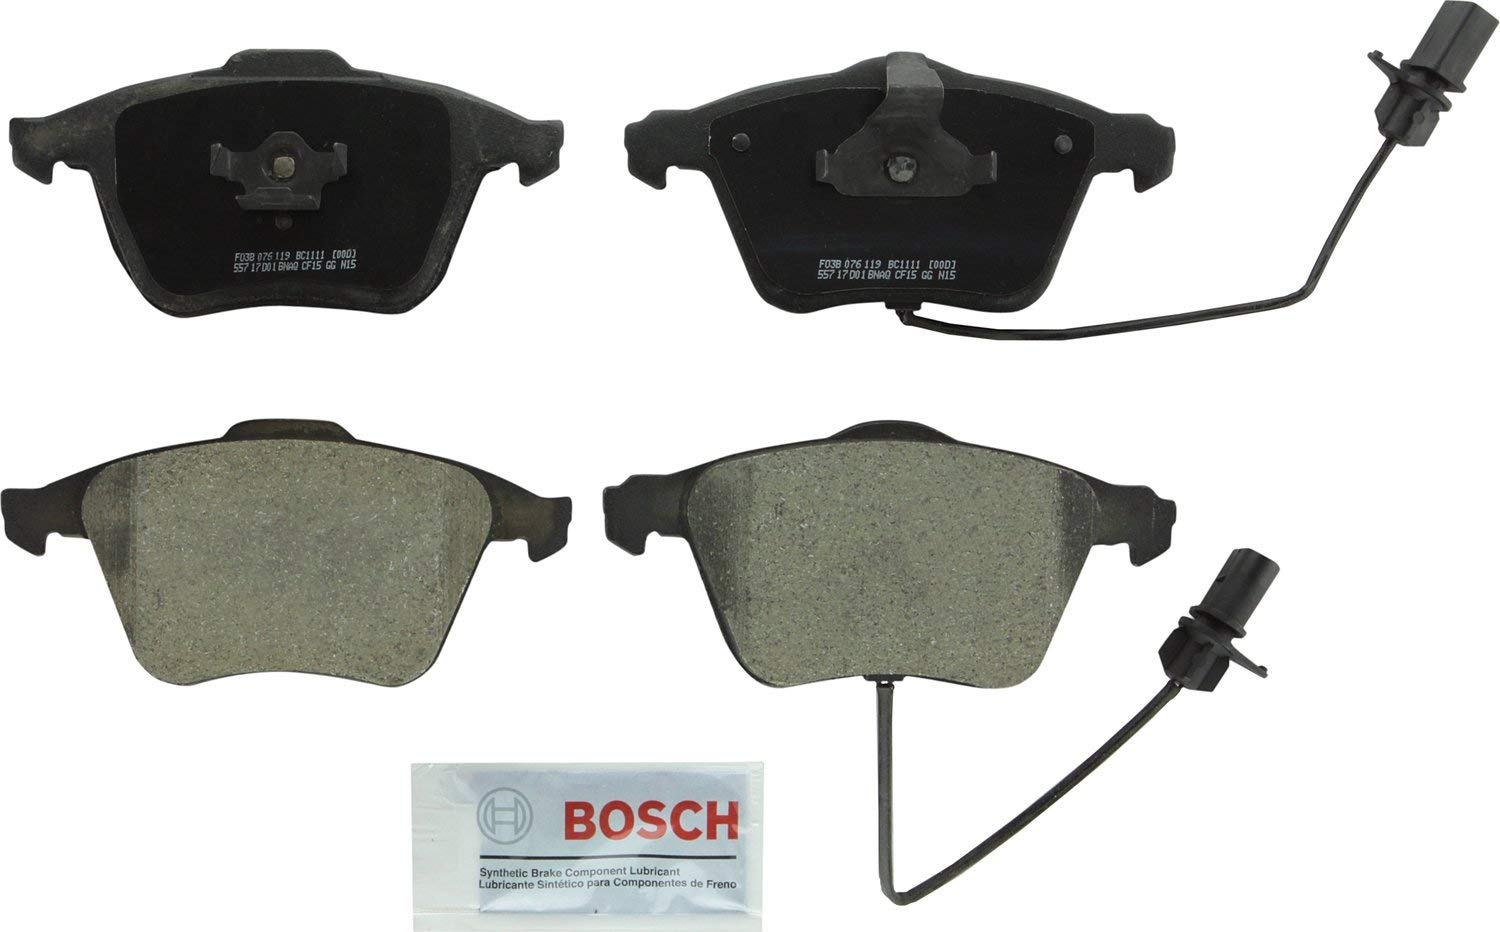 Bosch BC1111 QuietCast Premium Ceramic Disc Brake Pad Set For Audi: 2005-2009 A4, 2005-2009 A4 Quattro, 2006-2011 A6, 2005-2011 A6 Quattro, 2004-2009 S4, 2011-2013 TT Quattro; Front